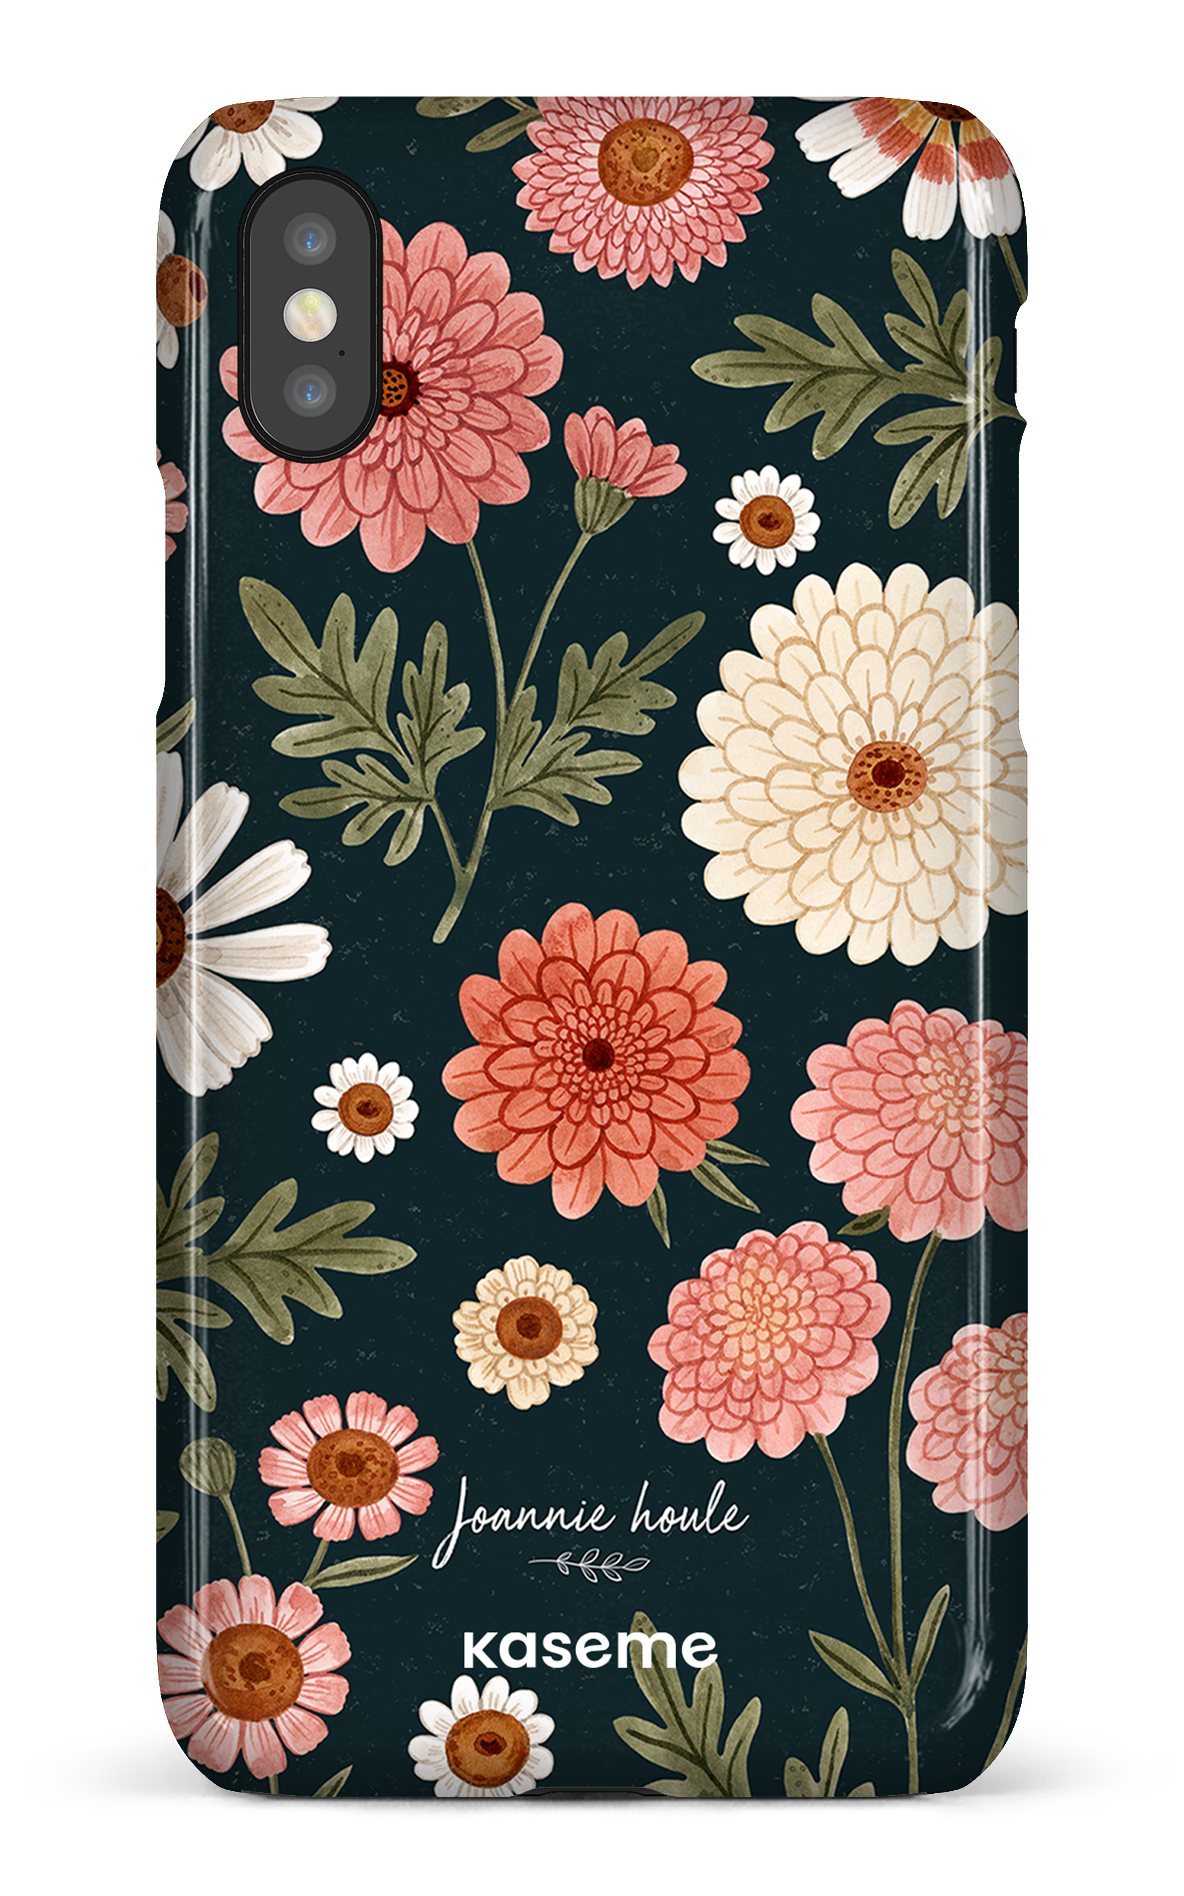 Chrysanthemums by Joannie Houle - iPhone X/Xs